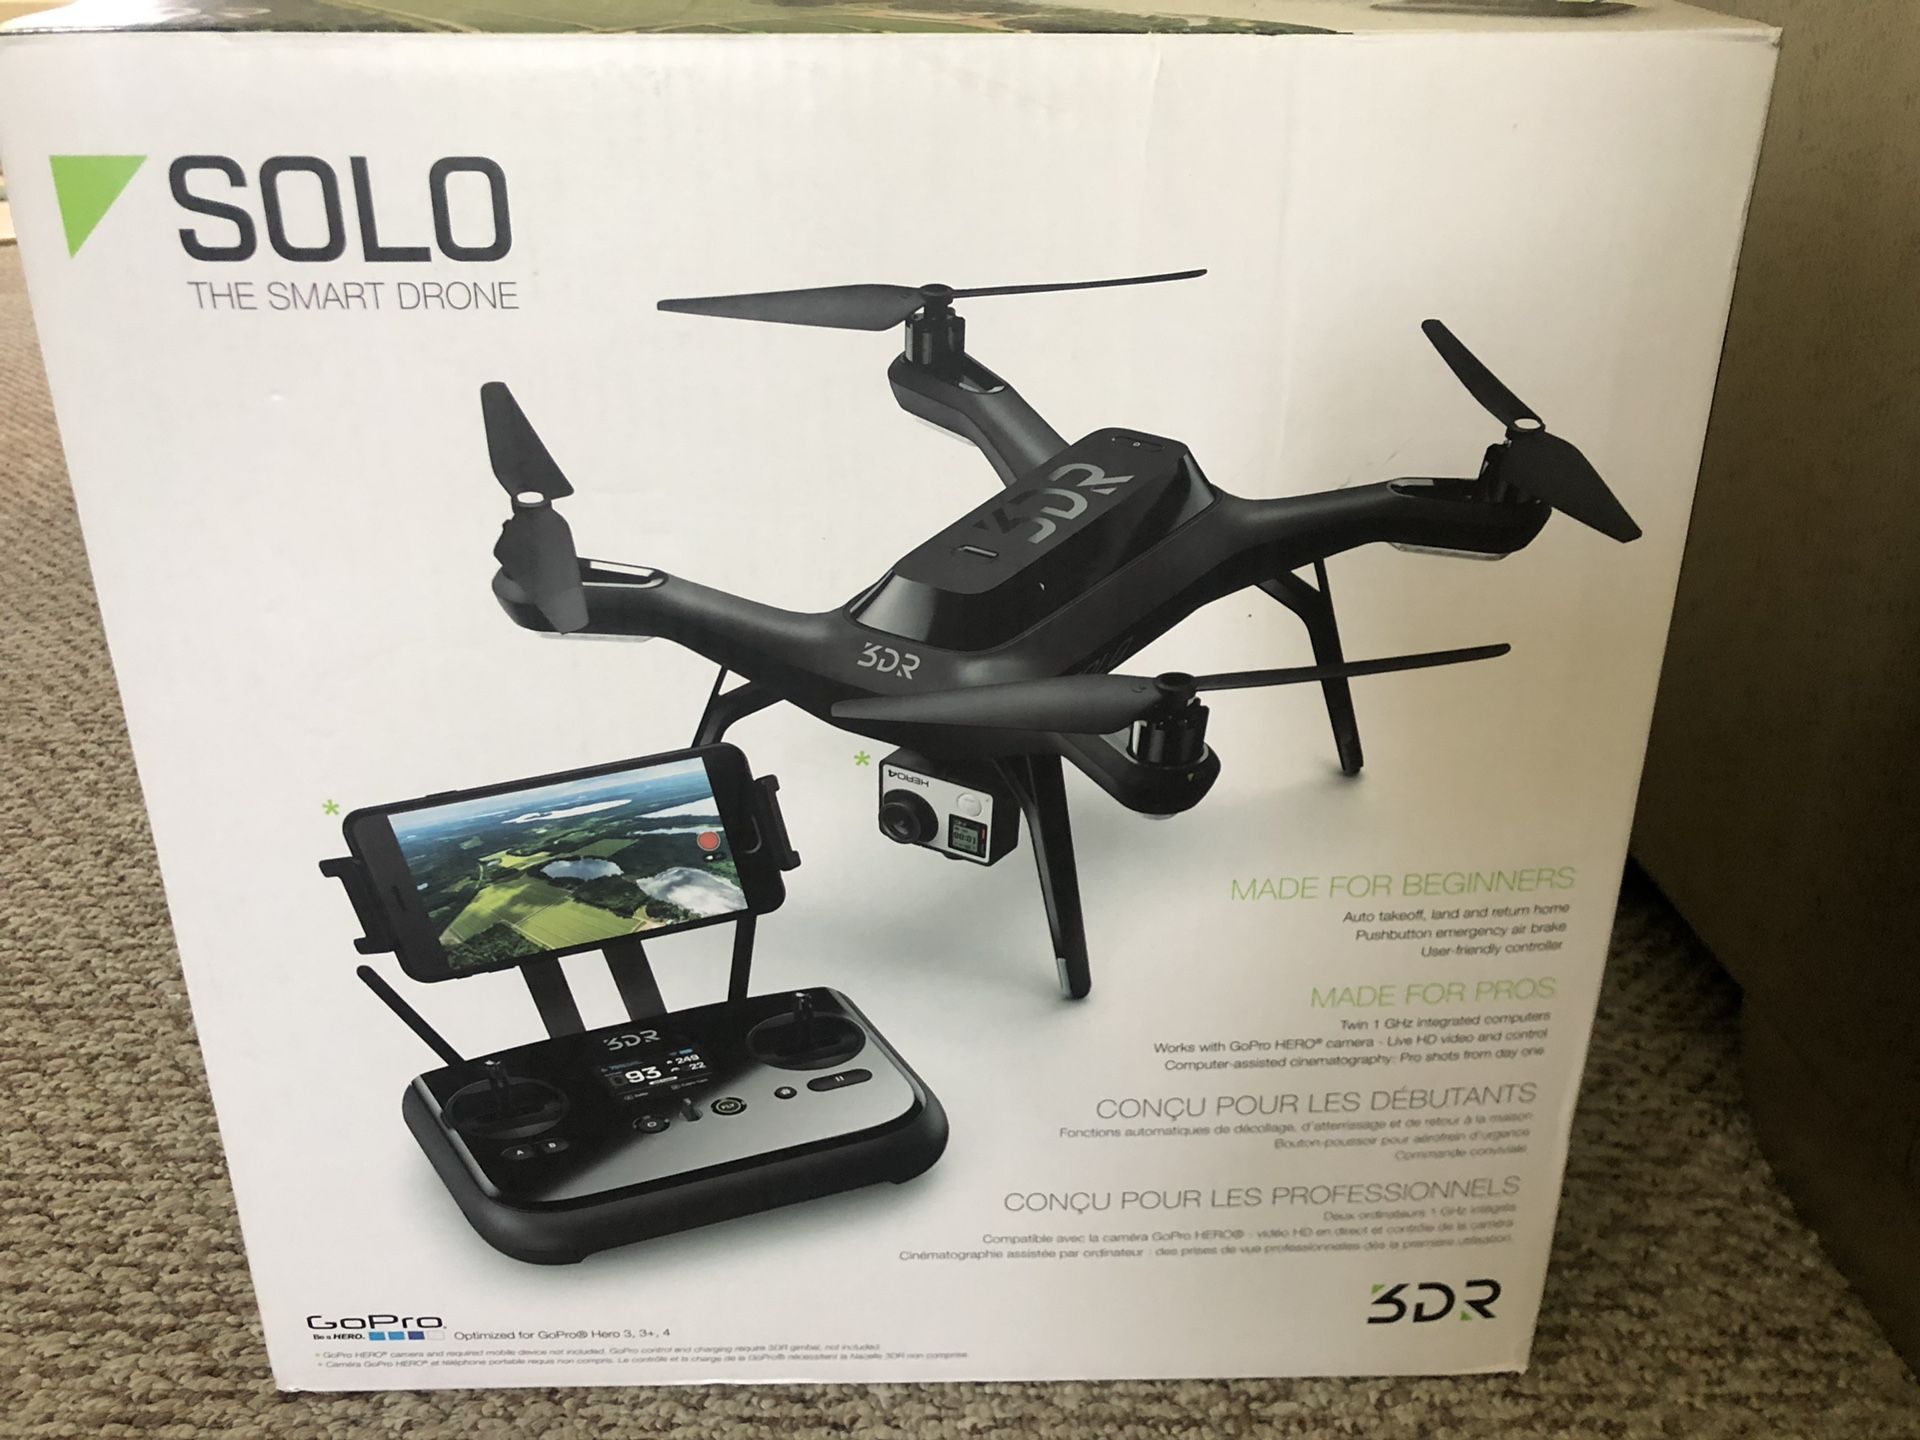 Solo smart drone (camera not included)